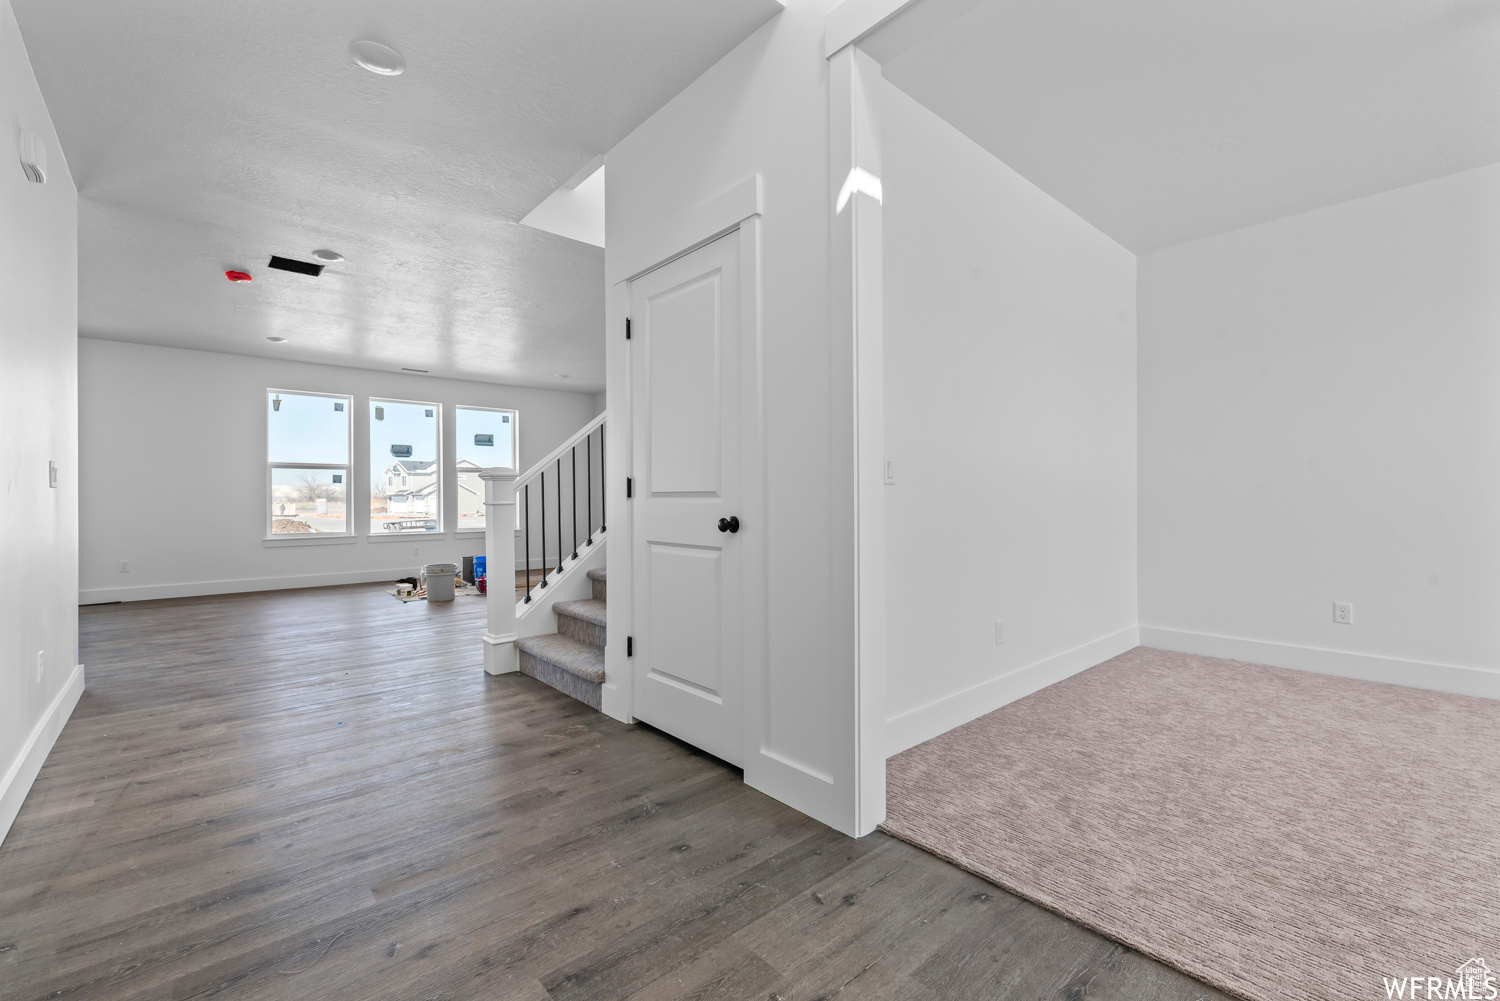 Unfurnished room featuring hardwood / wood-style floors